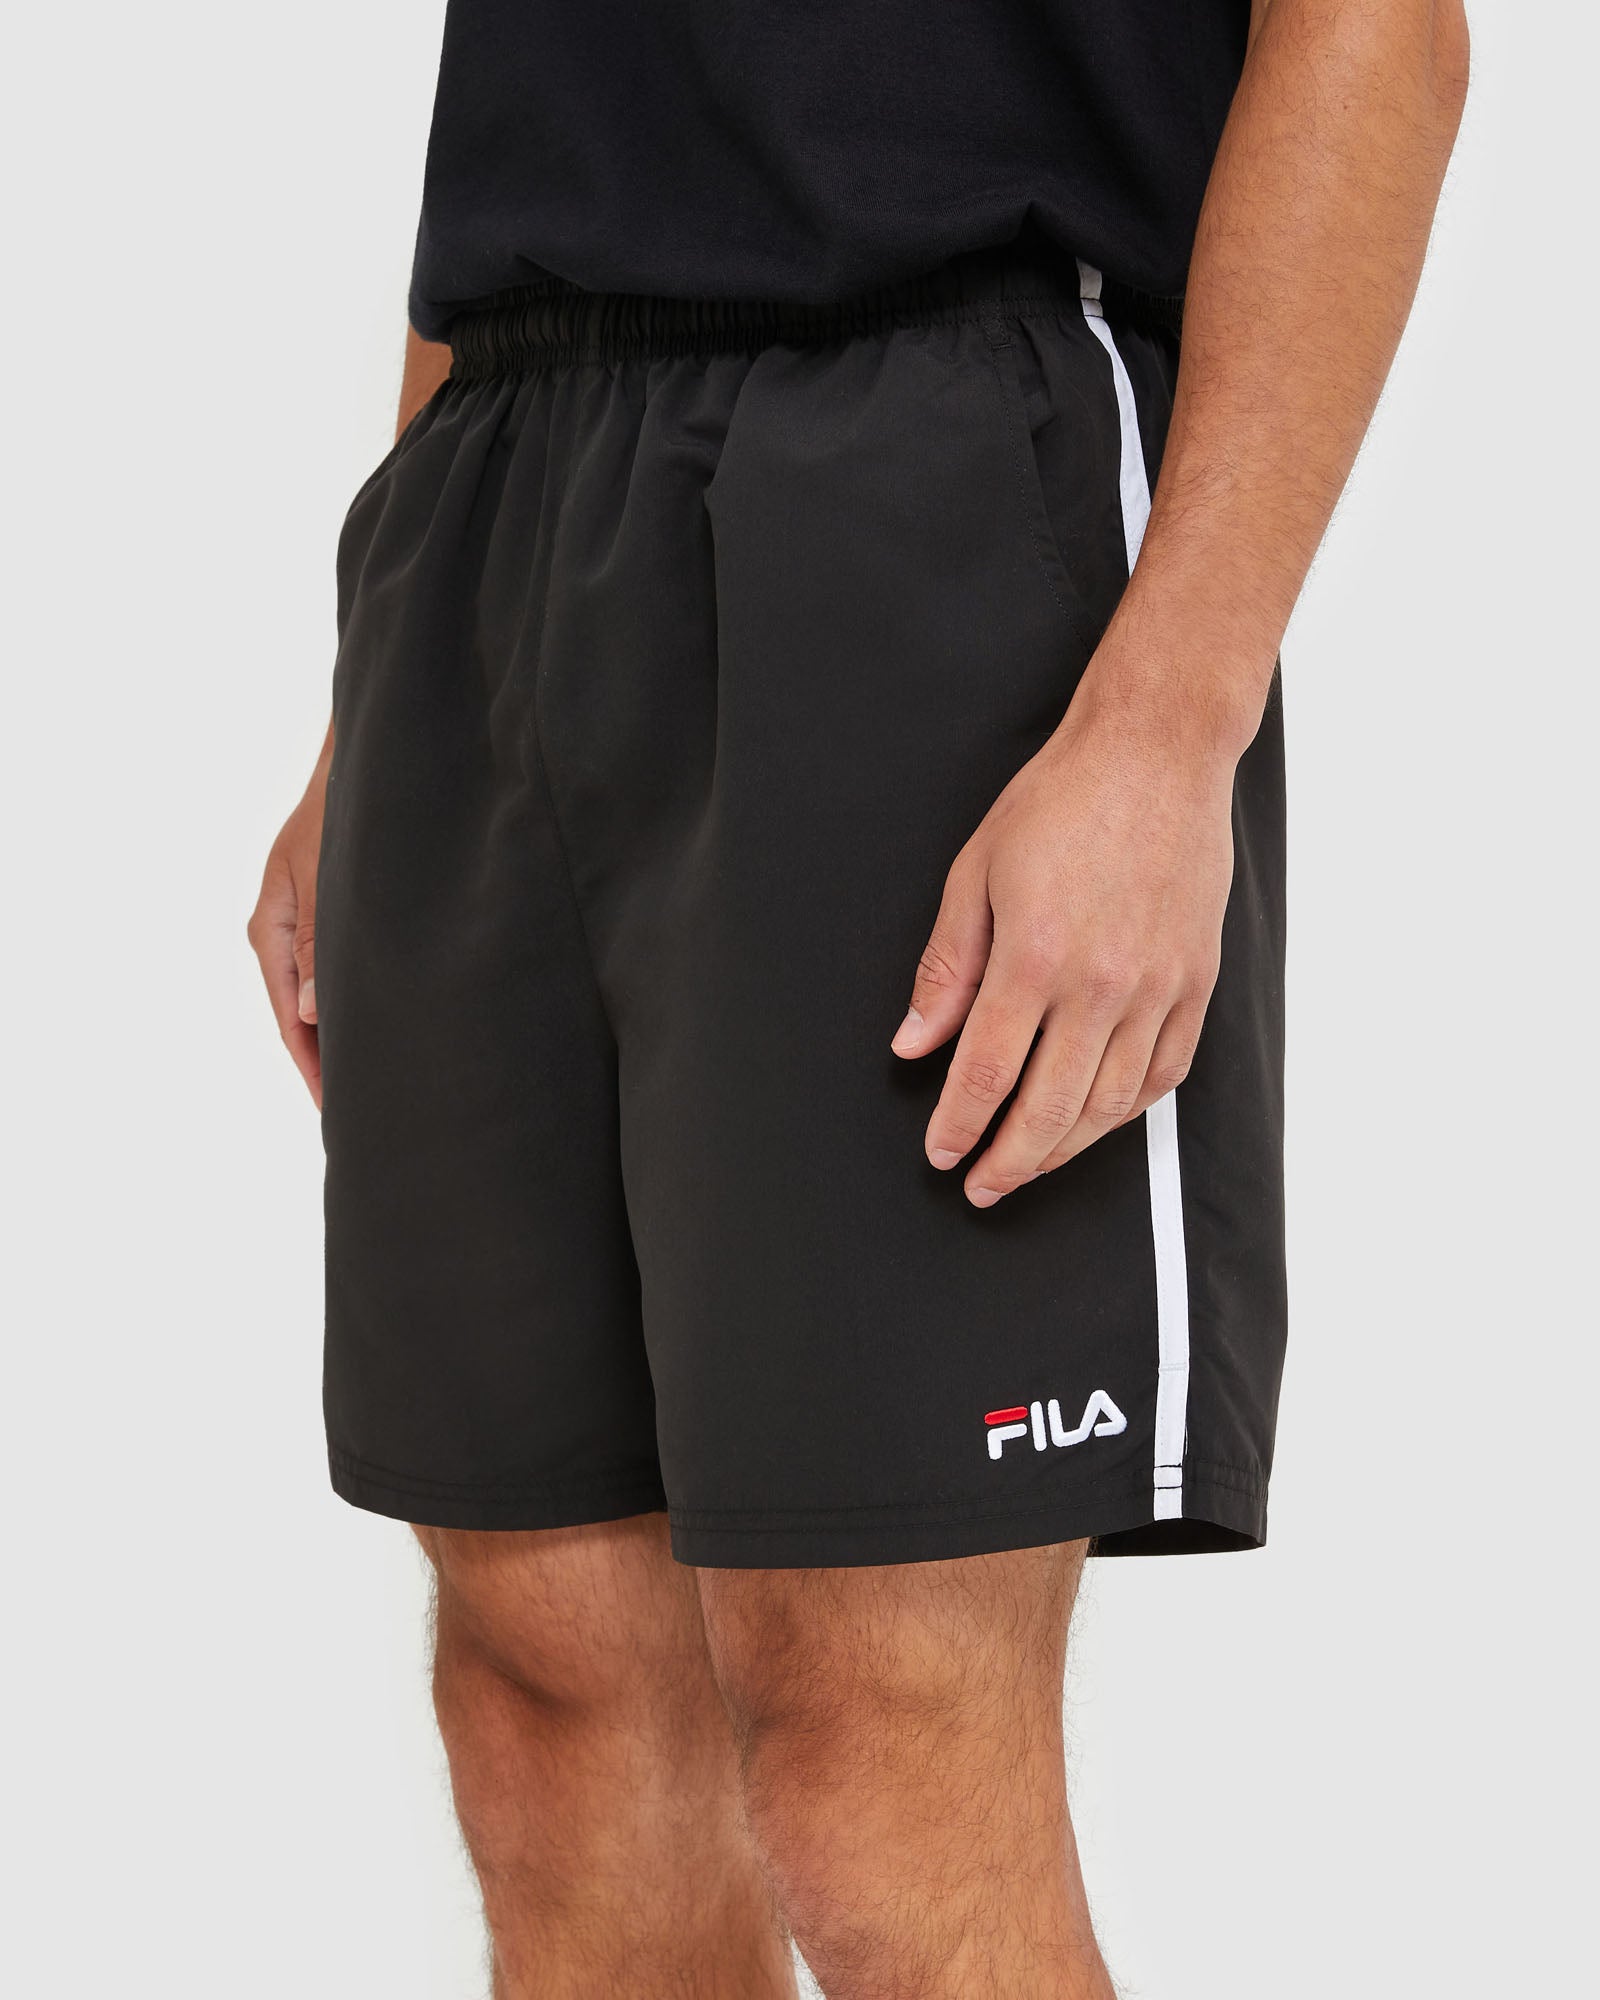 Classic Men's Microfibre Shorts | FILA Australia